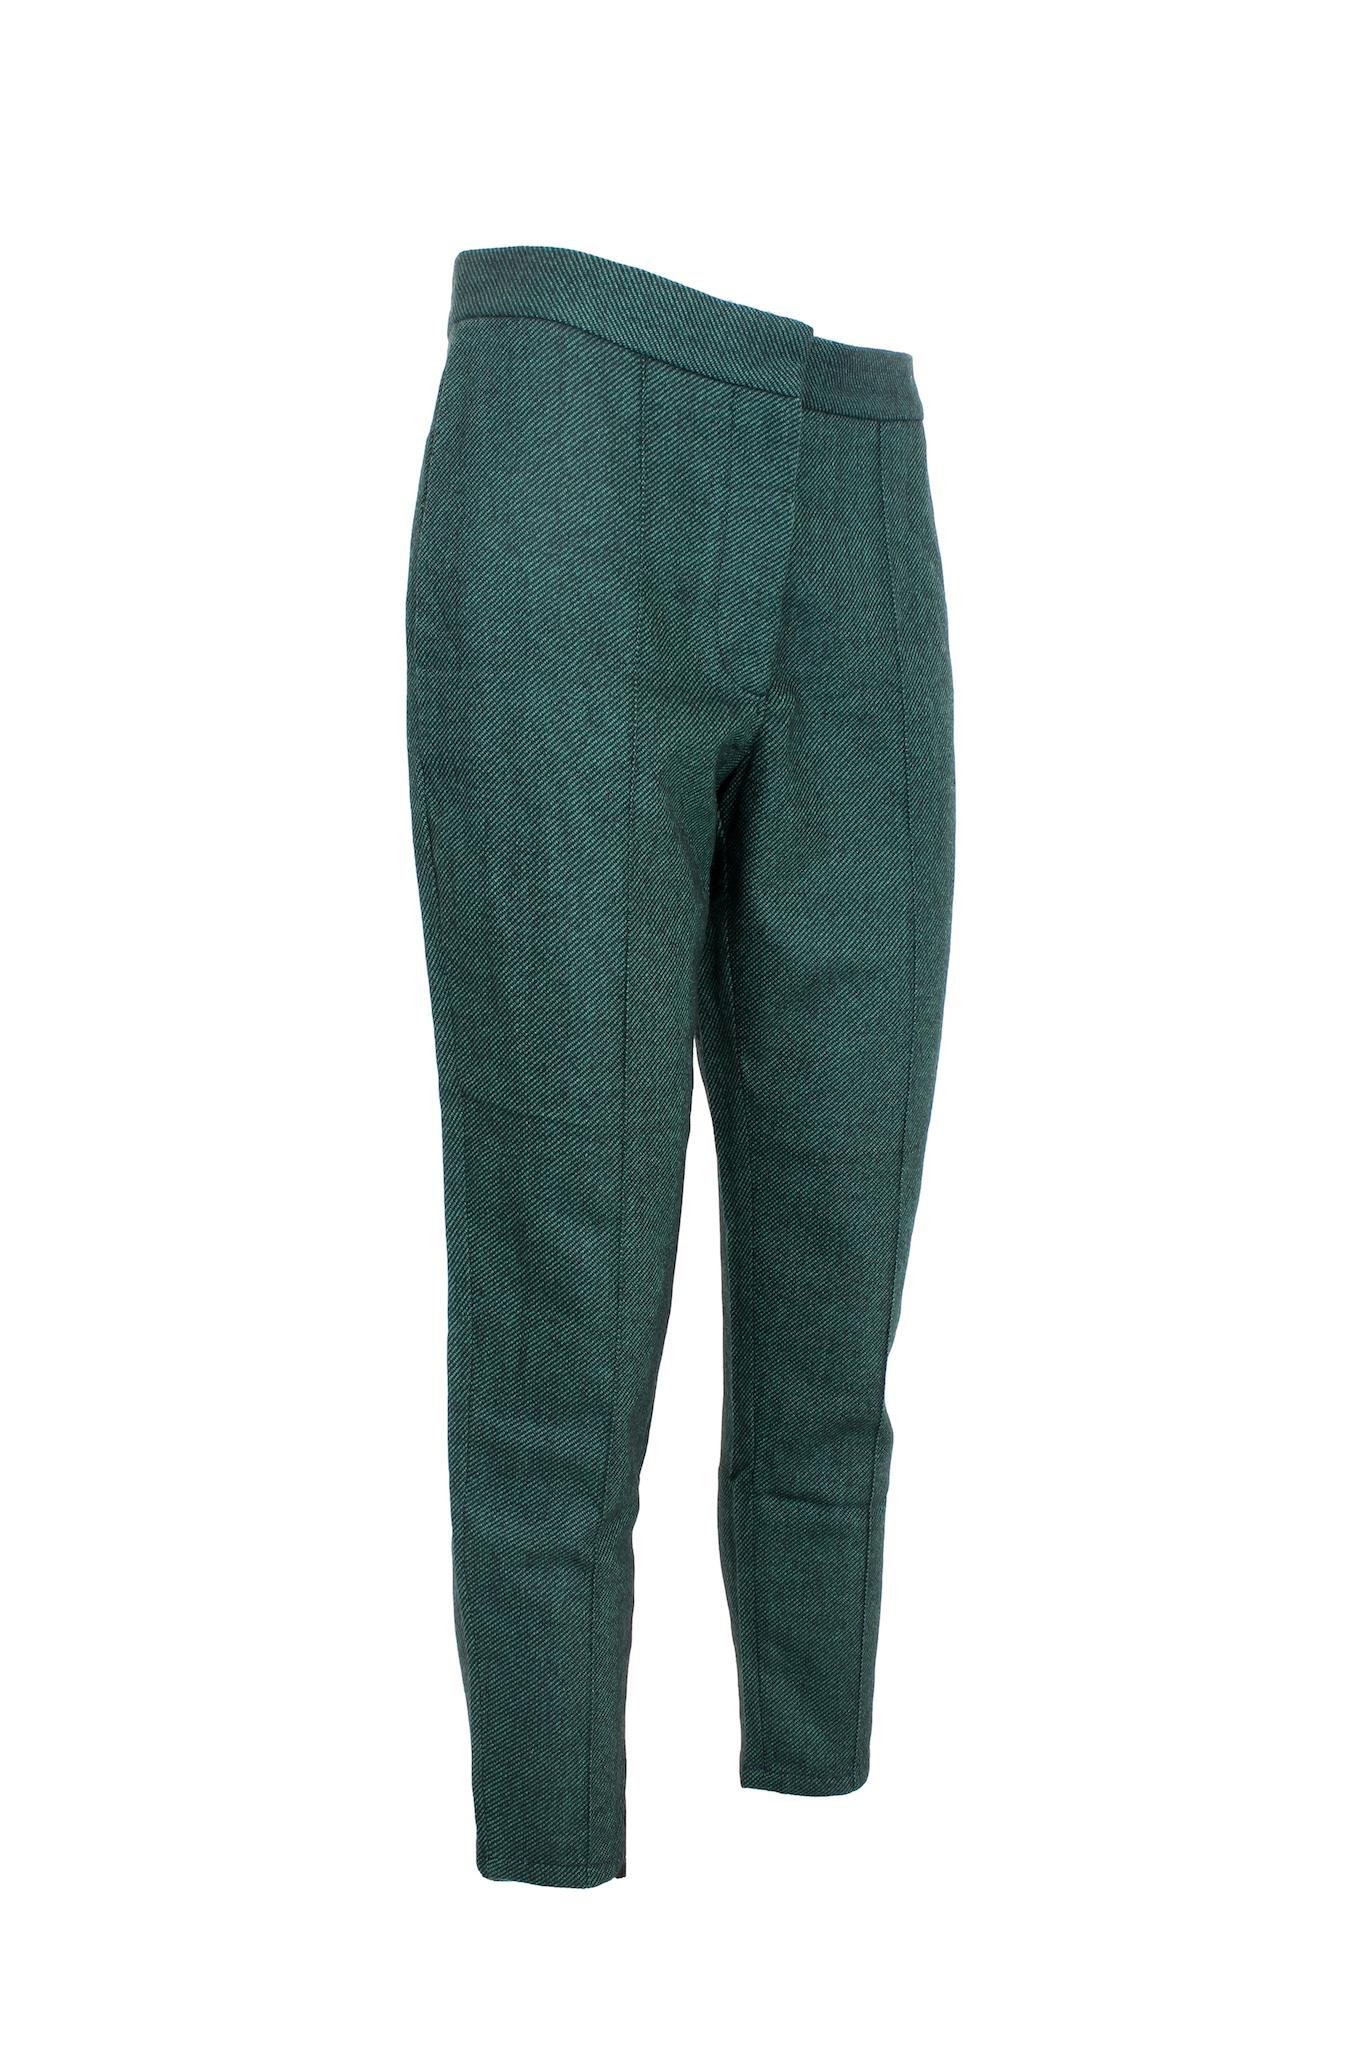 Women's Stella McCartney Green Black Wool Capri Pants 2000s For Sale